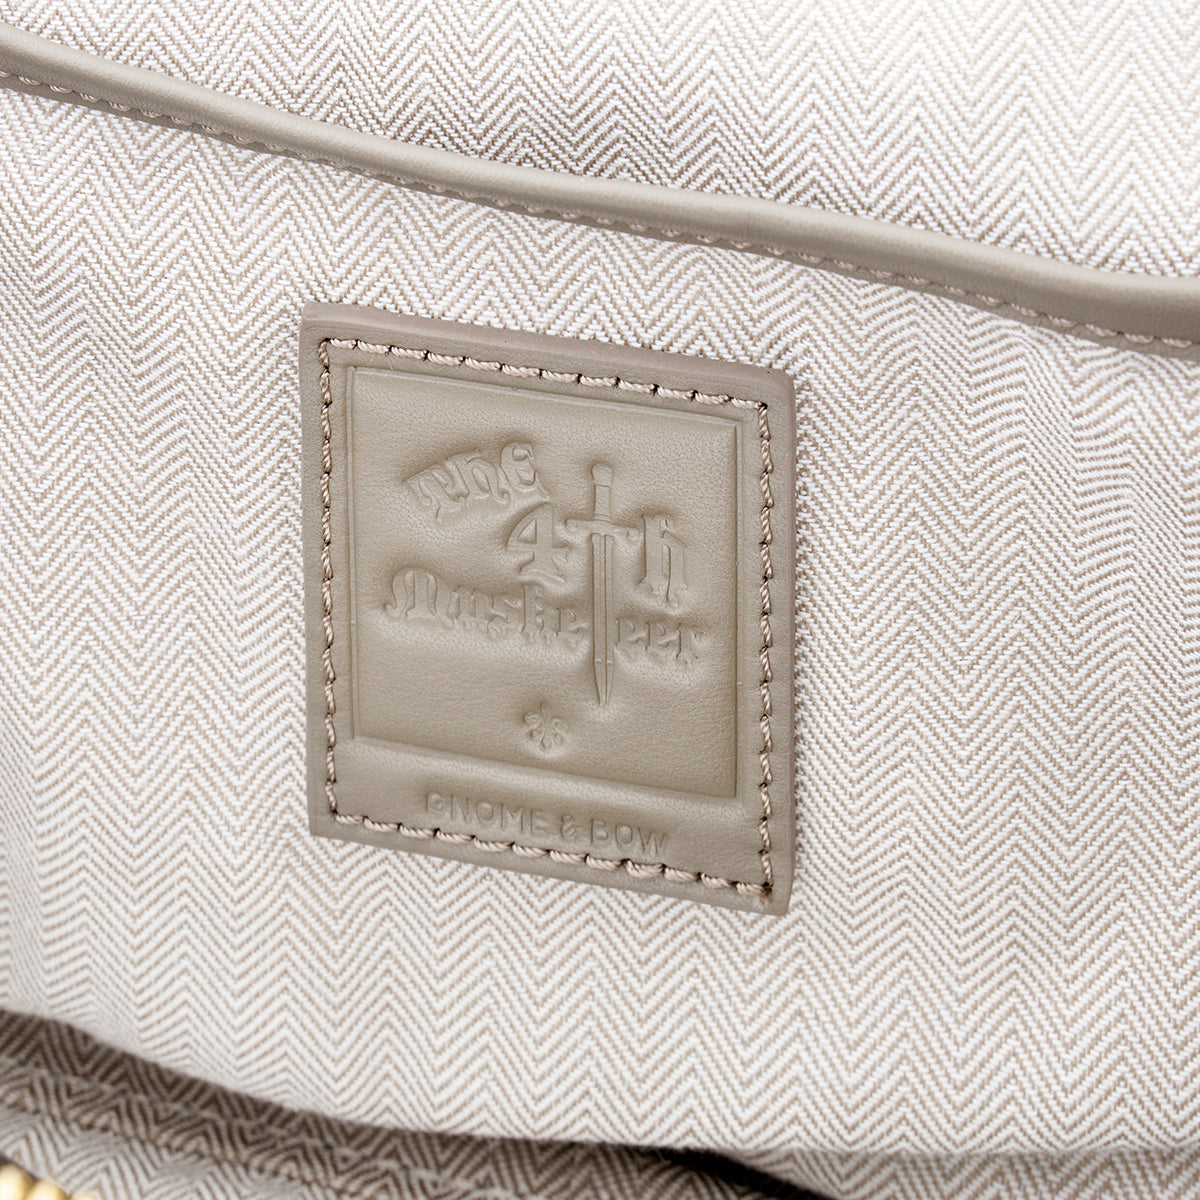 Musketeer Dryna Crossbody Sling Handbag (Water Resistant Nylon / USA Nappa Leather)